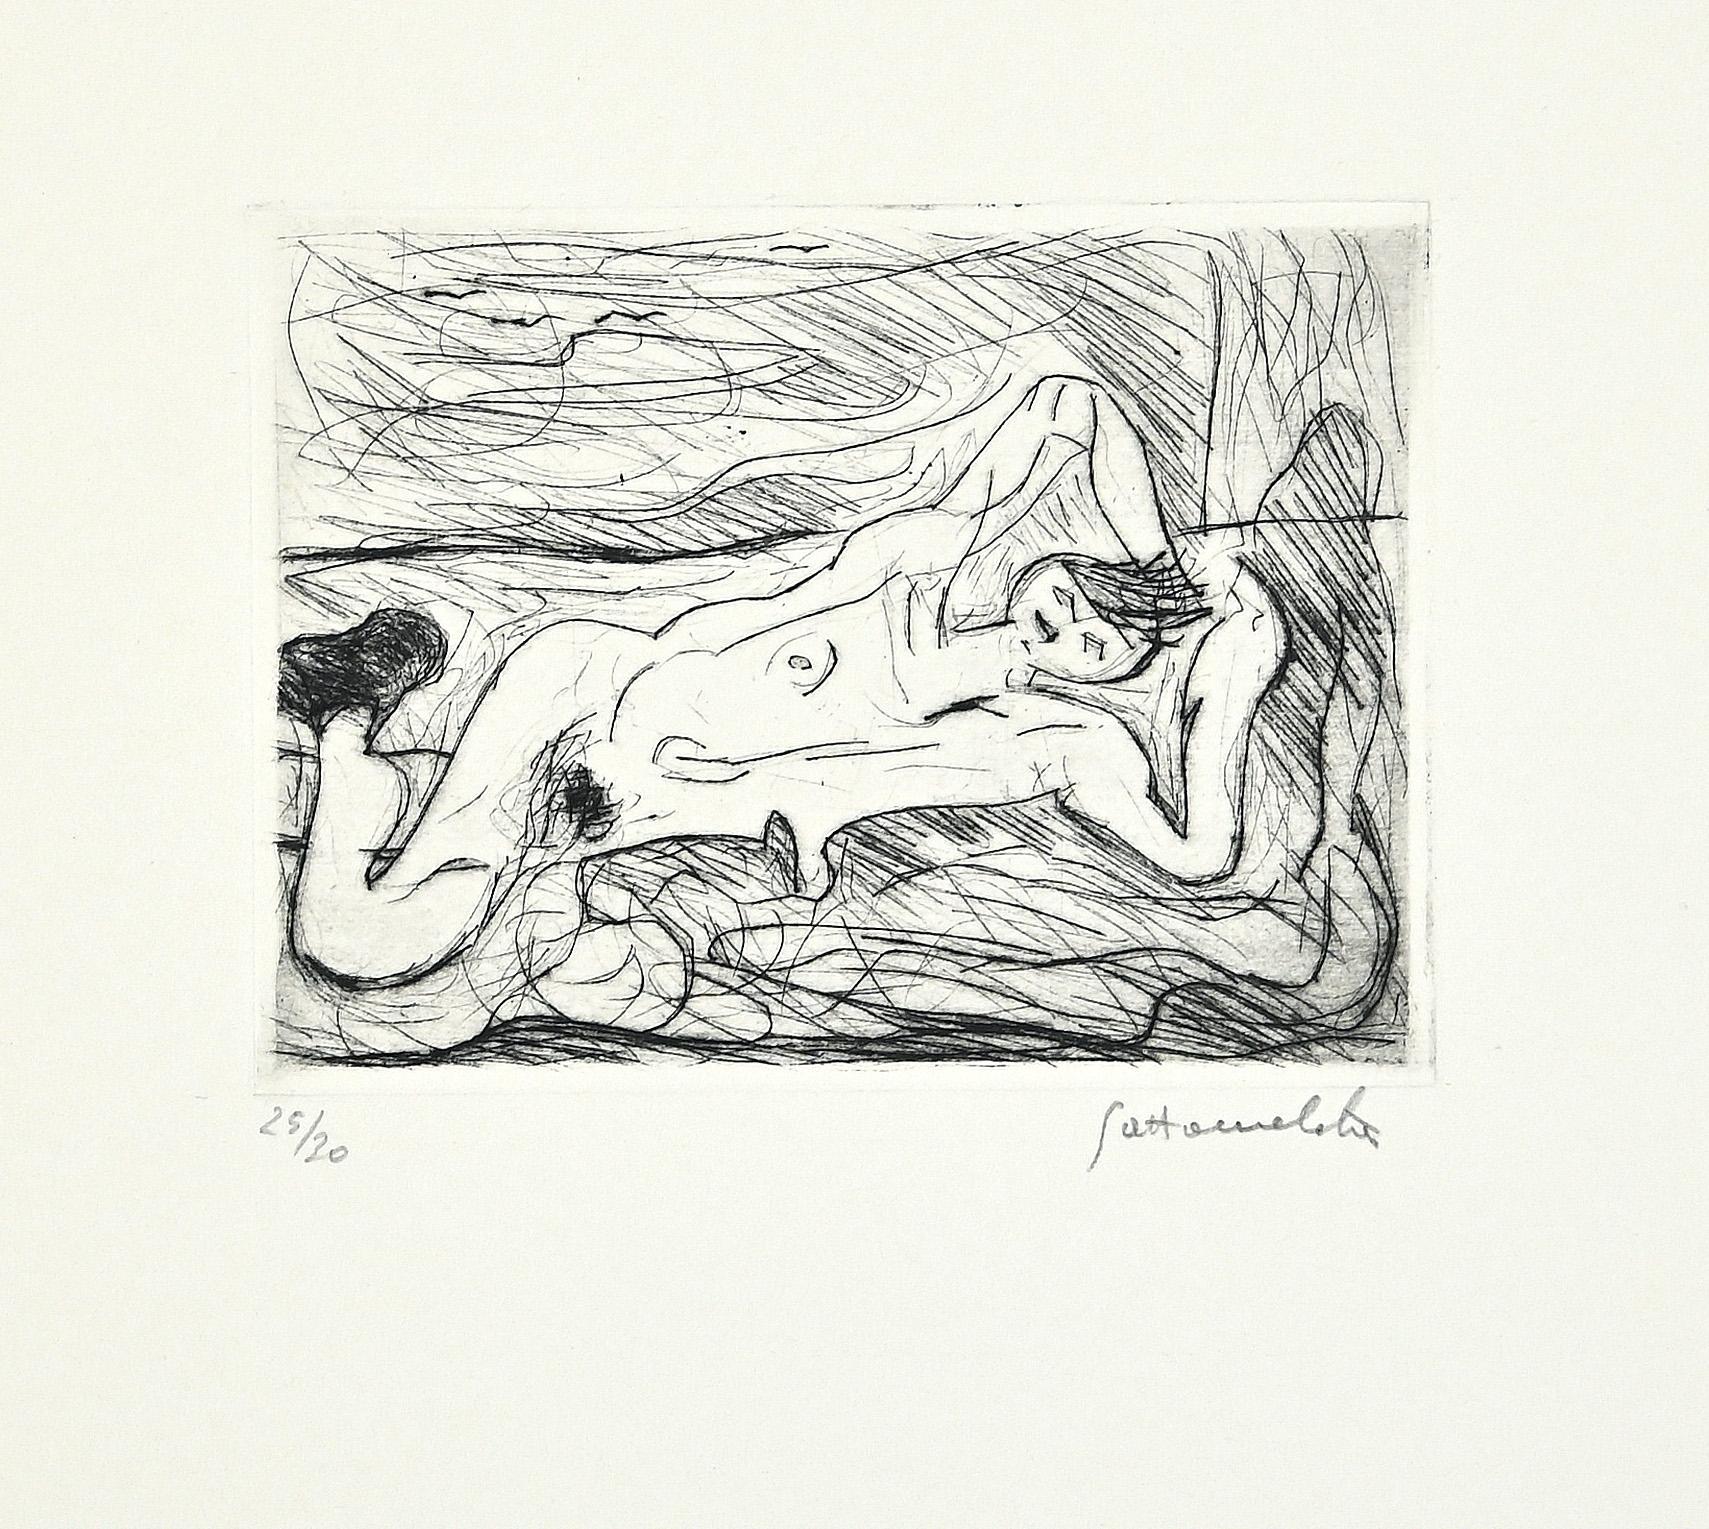 Nazareno Gattamenata Figurative Print - Nude Lying Down - Original Etching on Paper by Nazareno Gattamelata - 1985